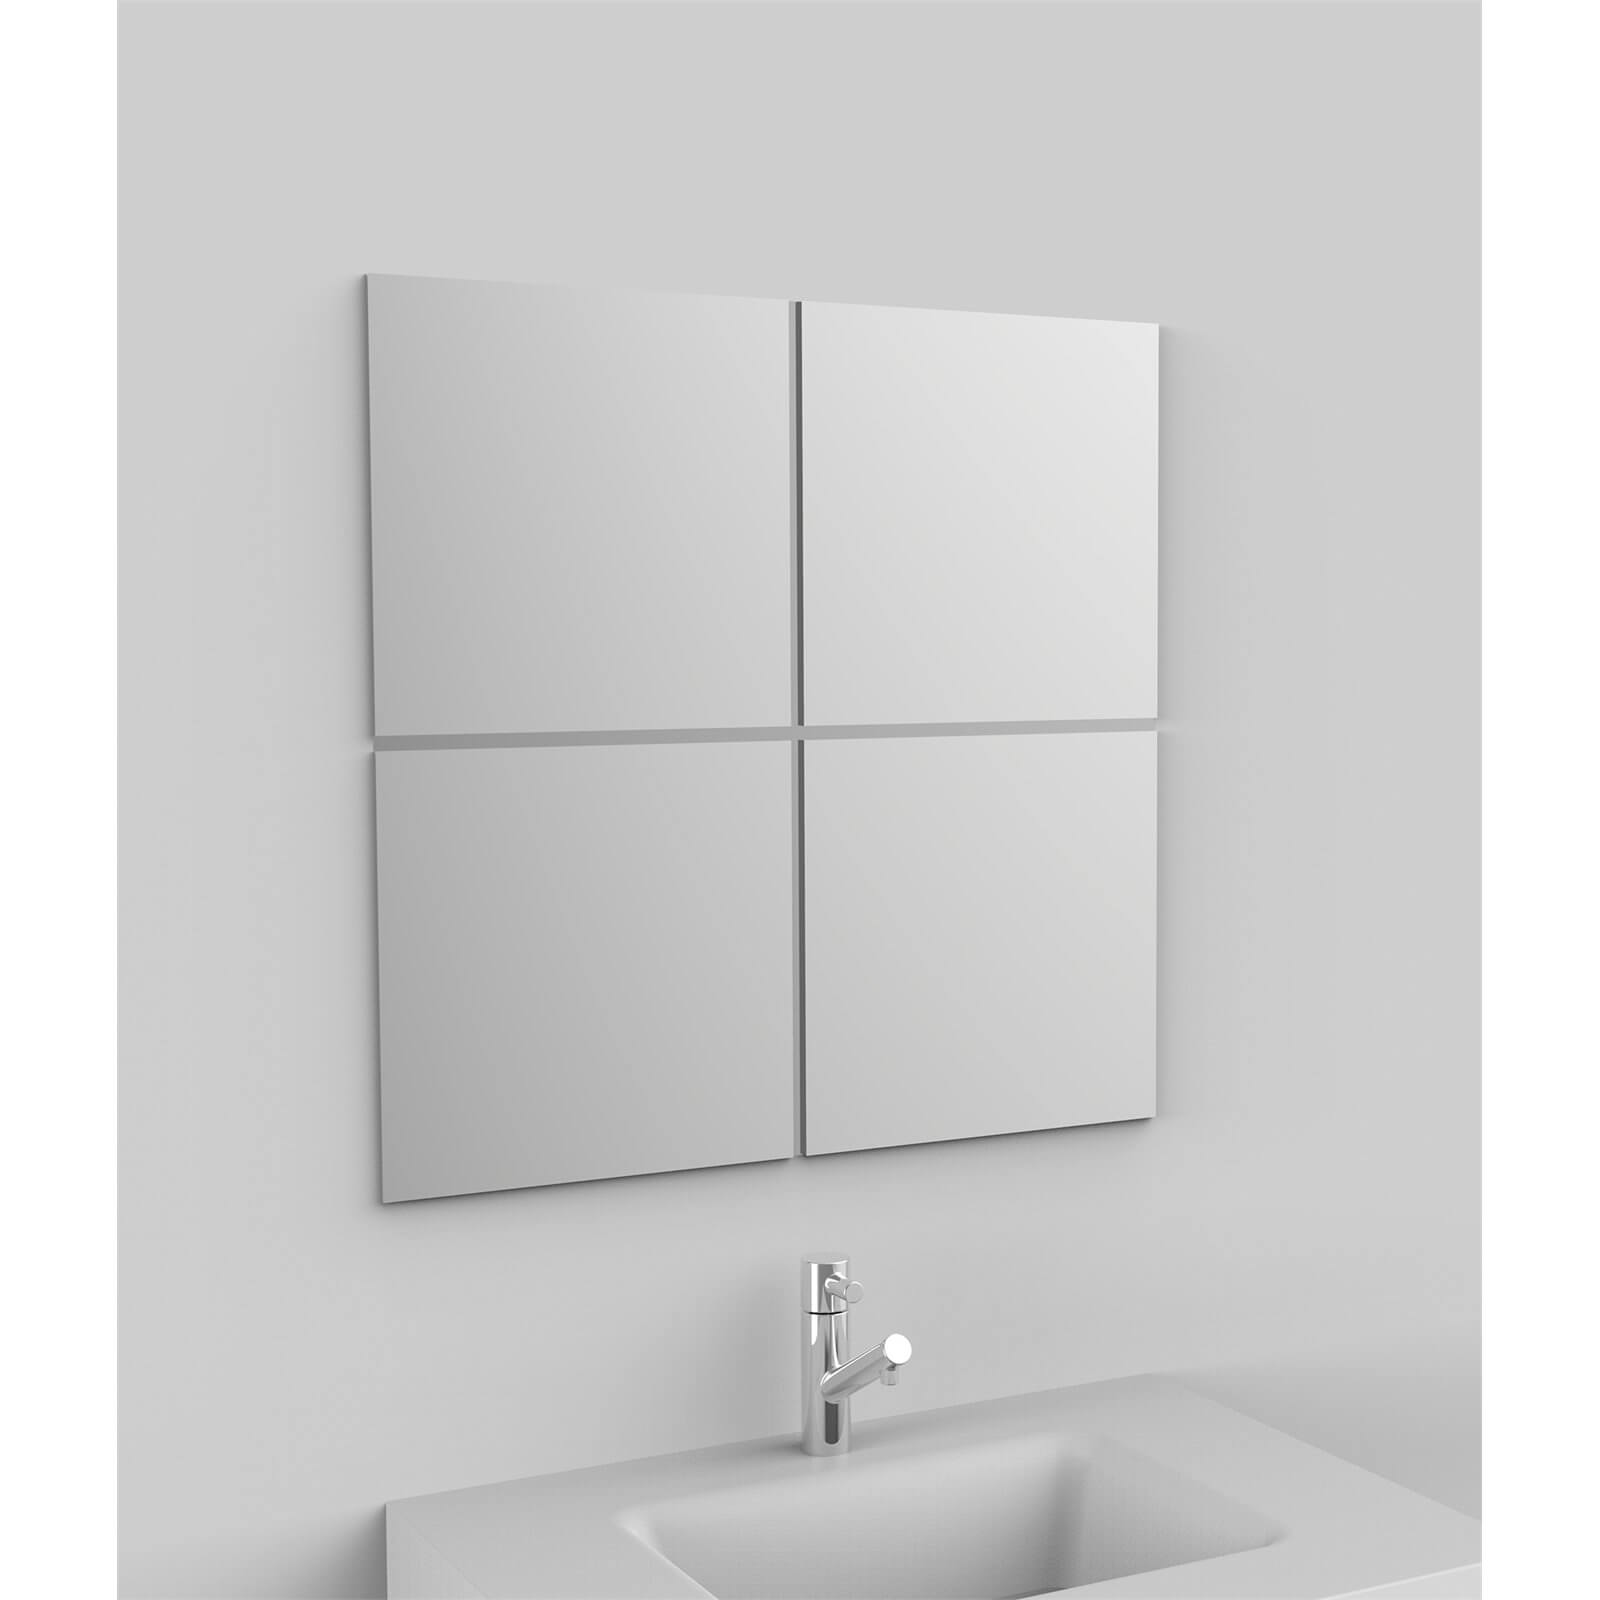 Pack of 4 Bathroom Mirror Tiles - 30x30cm